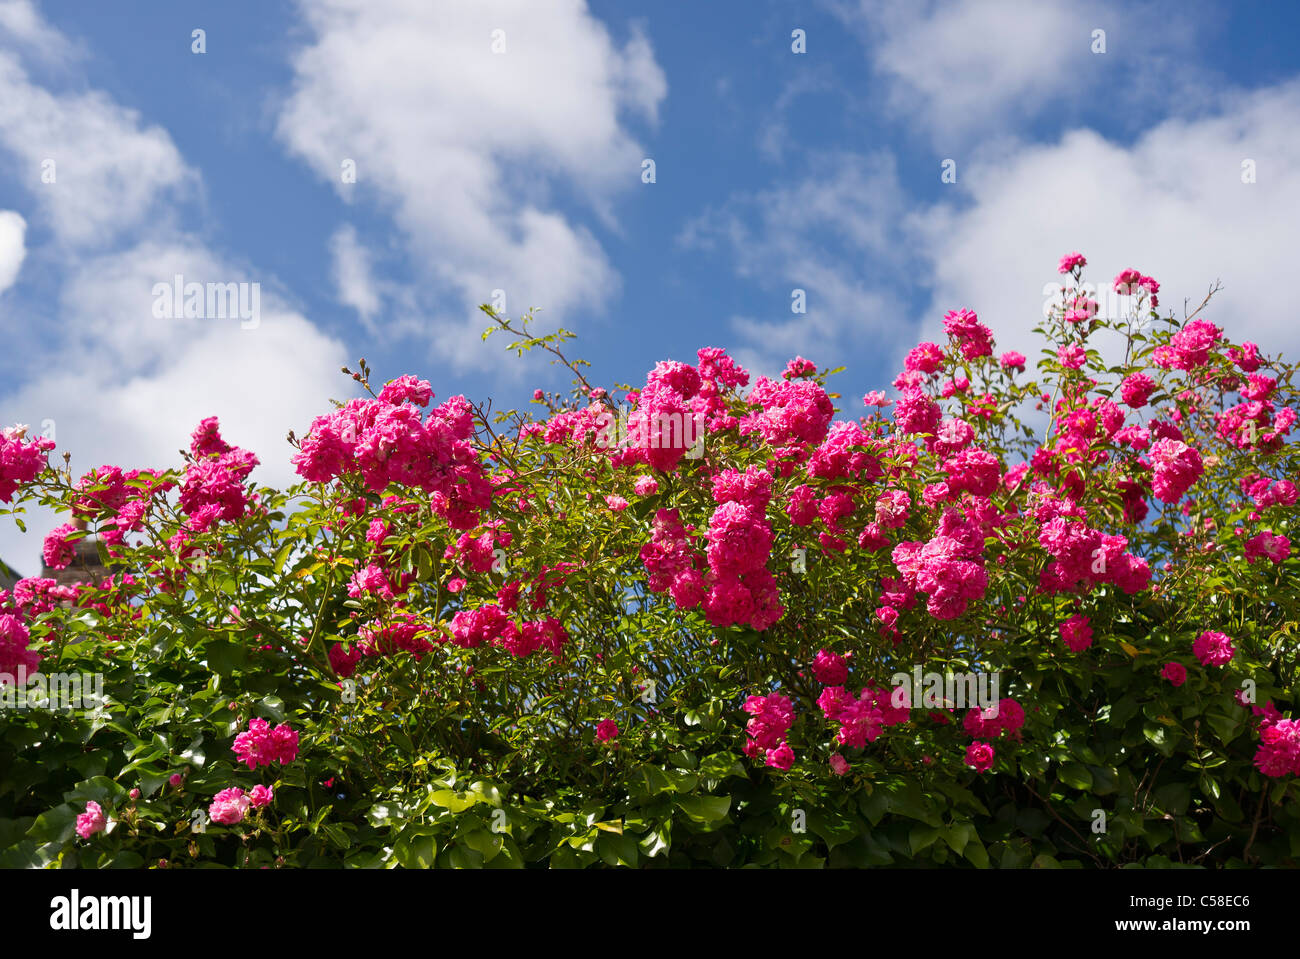 Masa de rambler rosa rosas florecer en Junio Foto de stock